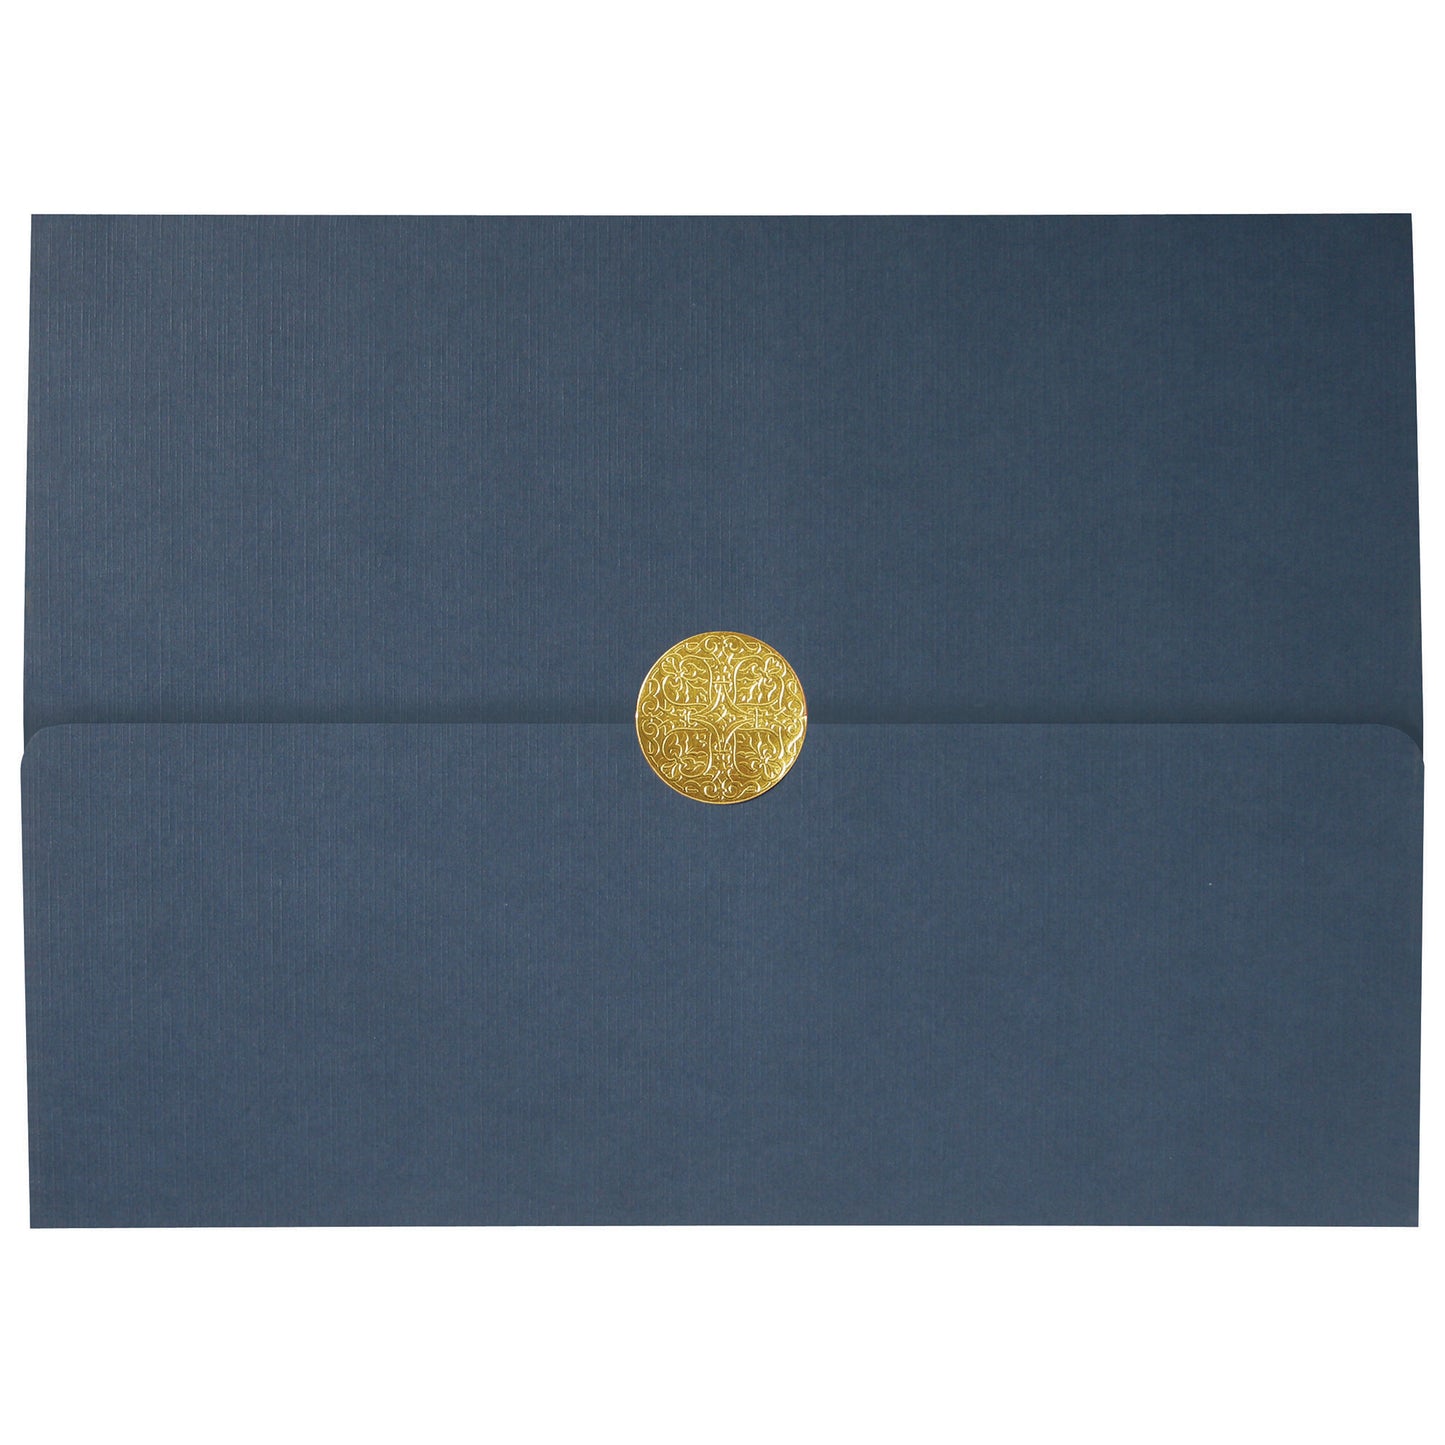 St. James® Elite™ Medallion Fold Certificate Holders, Navy Blue Linen with Gold Medallion, Pack of 5